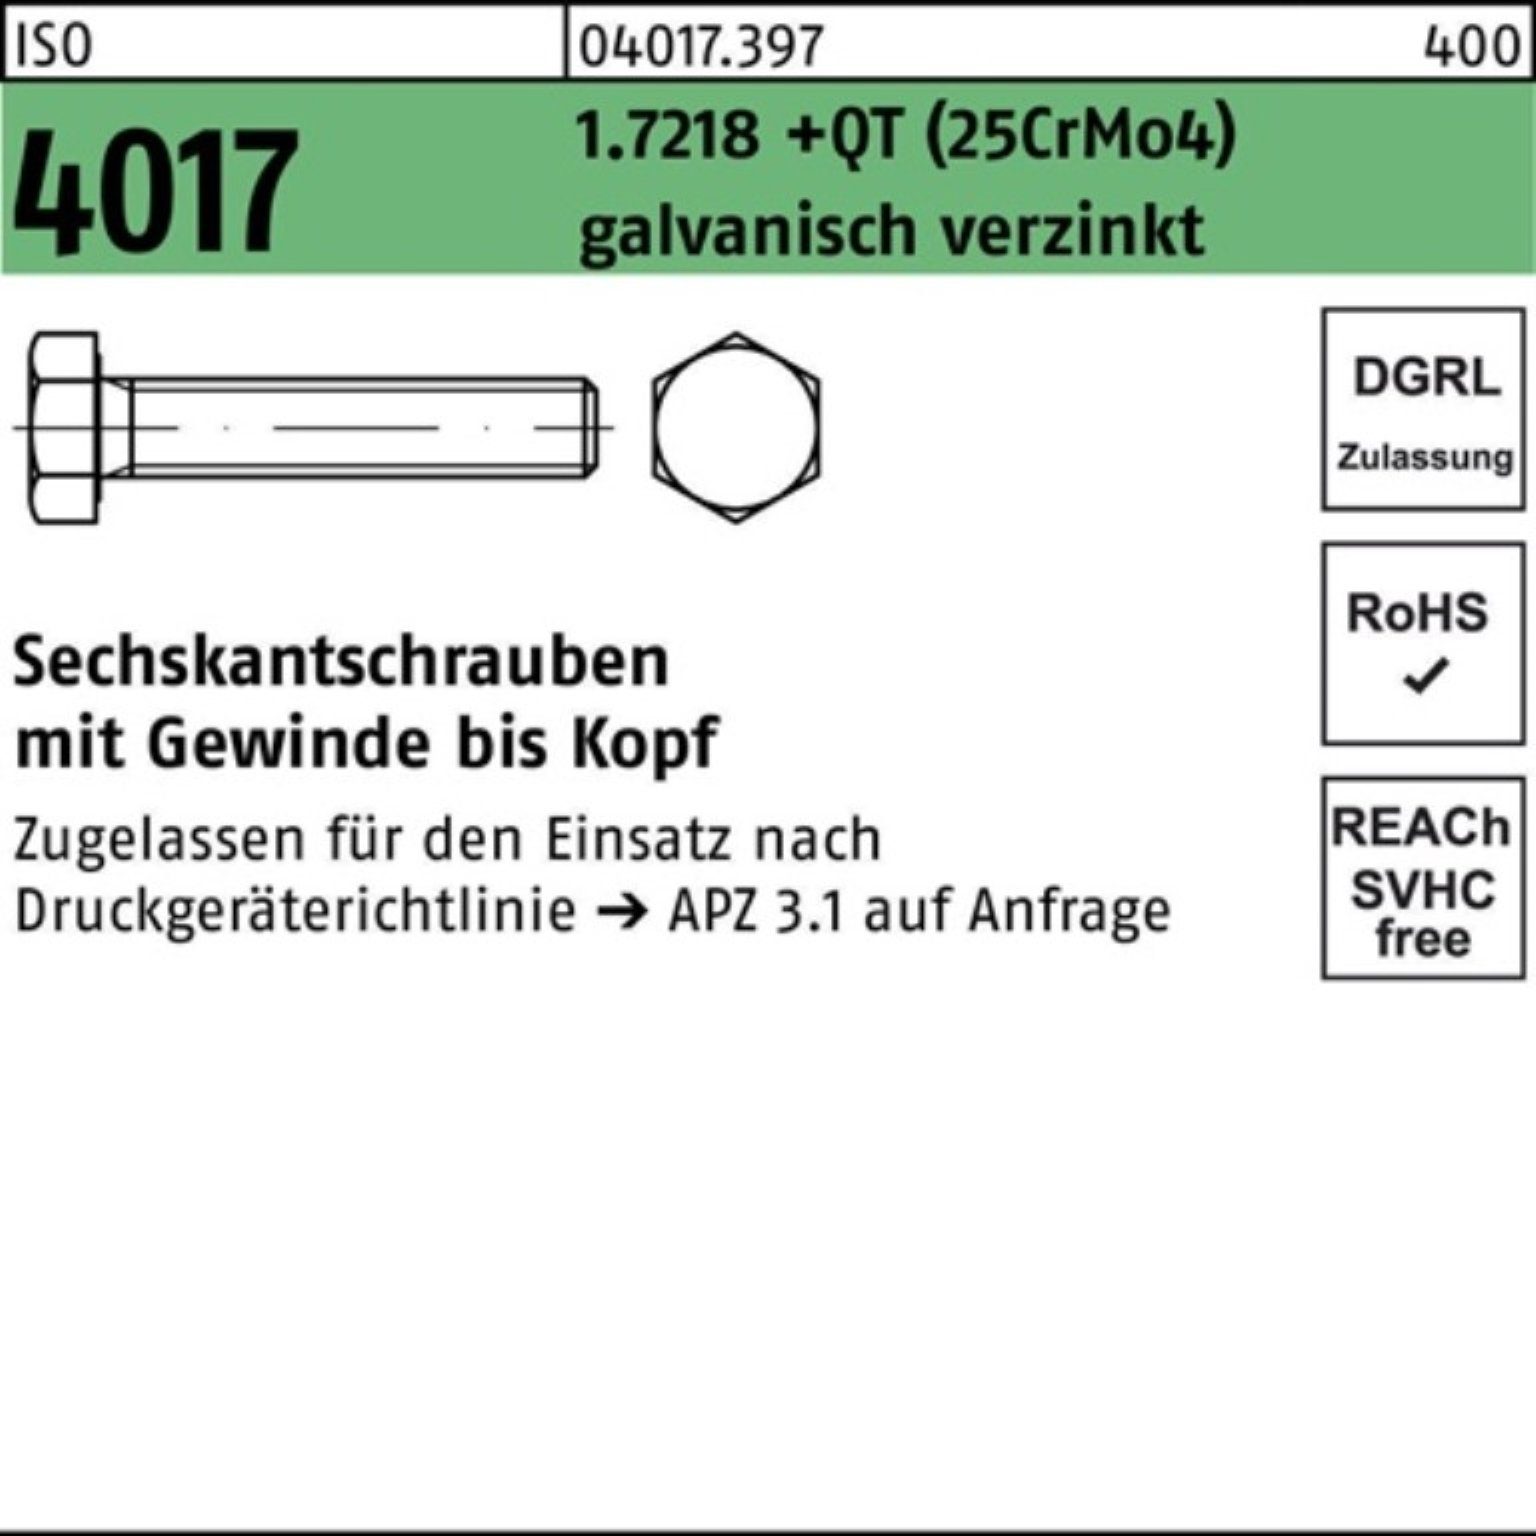 Bufab Sechskantschraube 100er Pack Sechskantschraube 1.7218 +QT M20x70 g (25CrMo4) ISO VG 4017